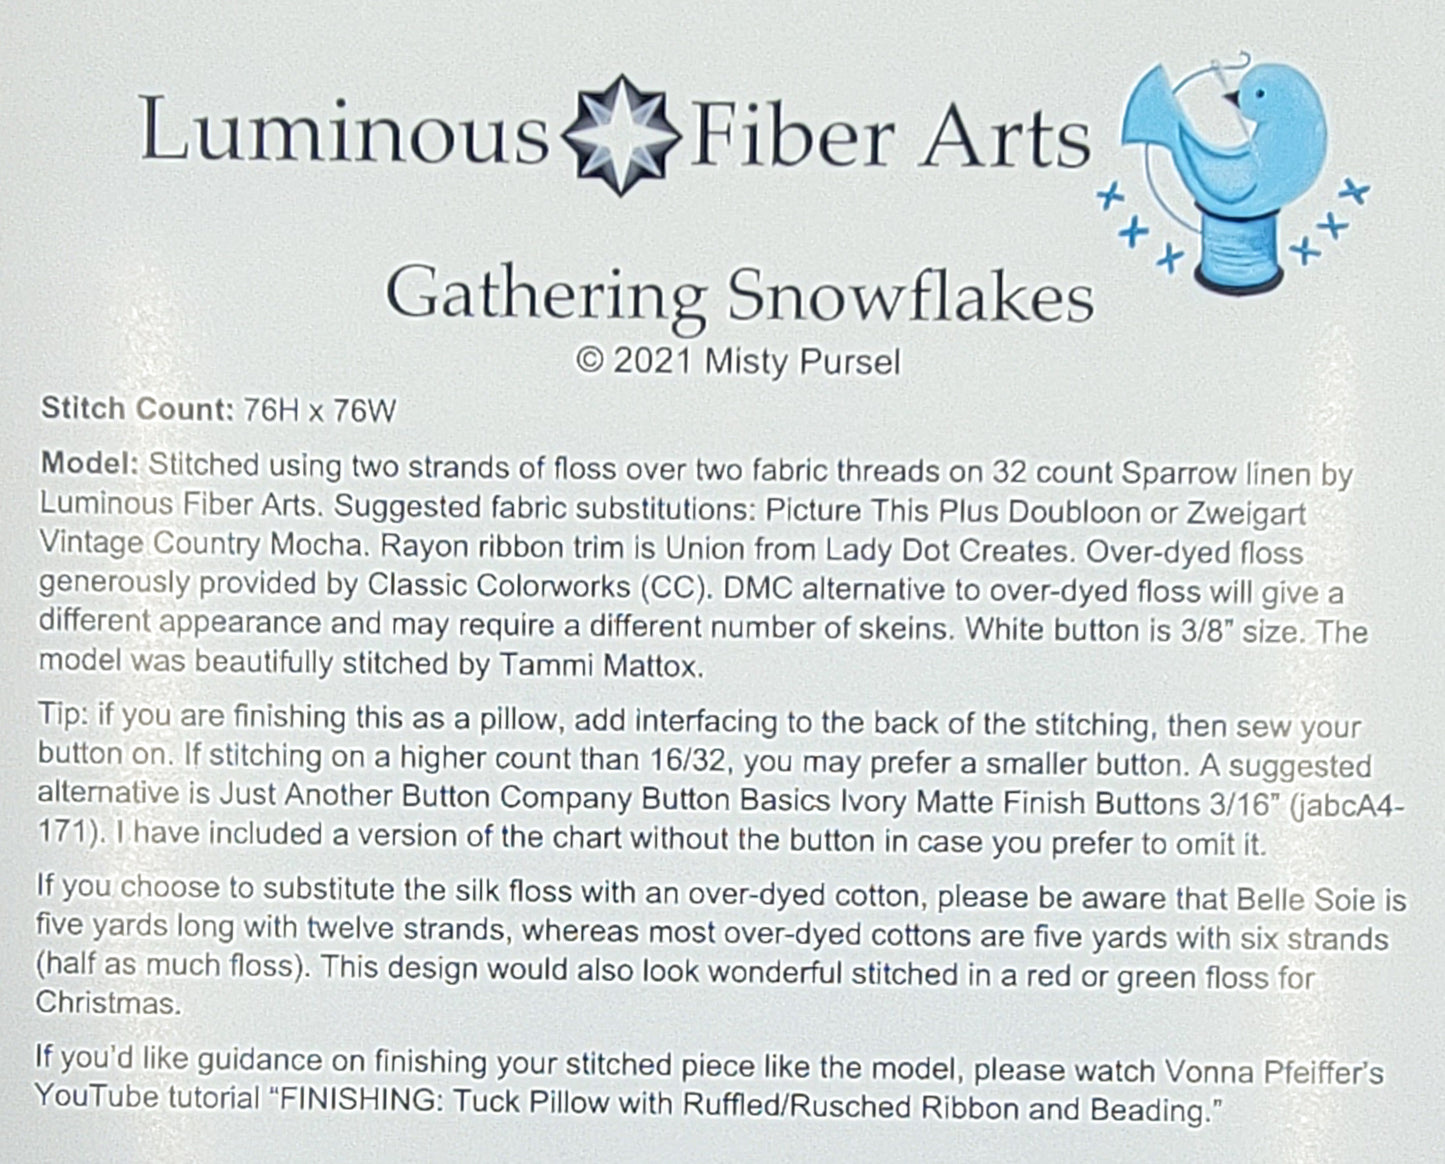 Gathering Snowflakes by Luminous Fiber Arts